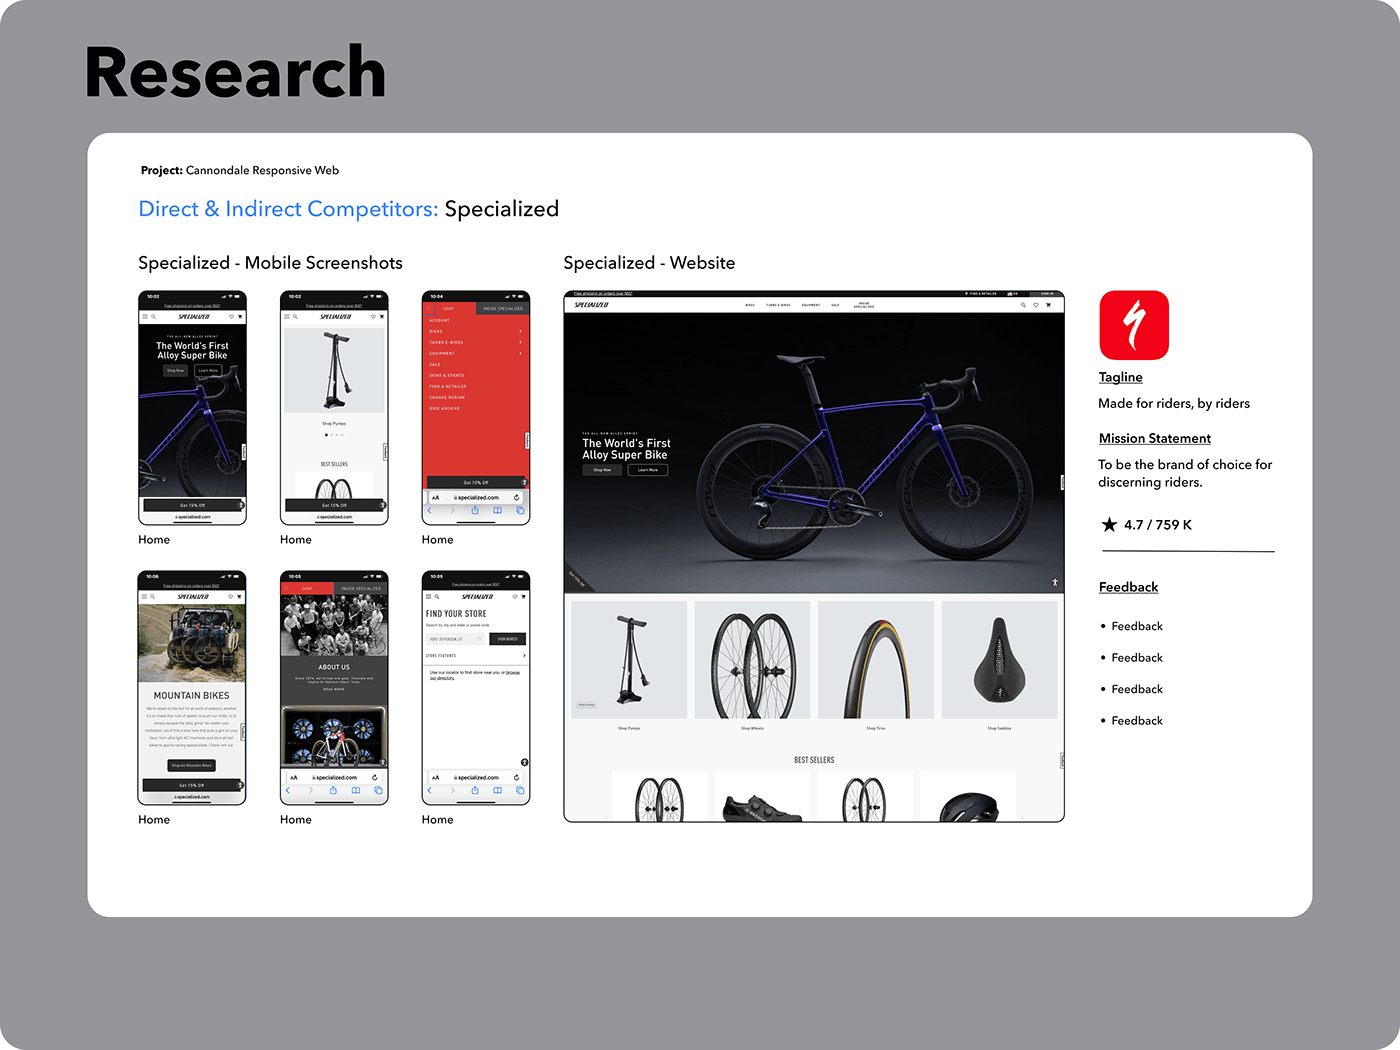 Image may contain: screenshot, abstract and bicycle